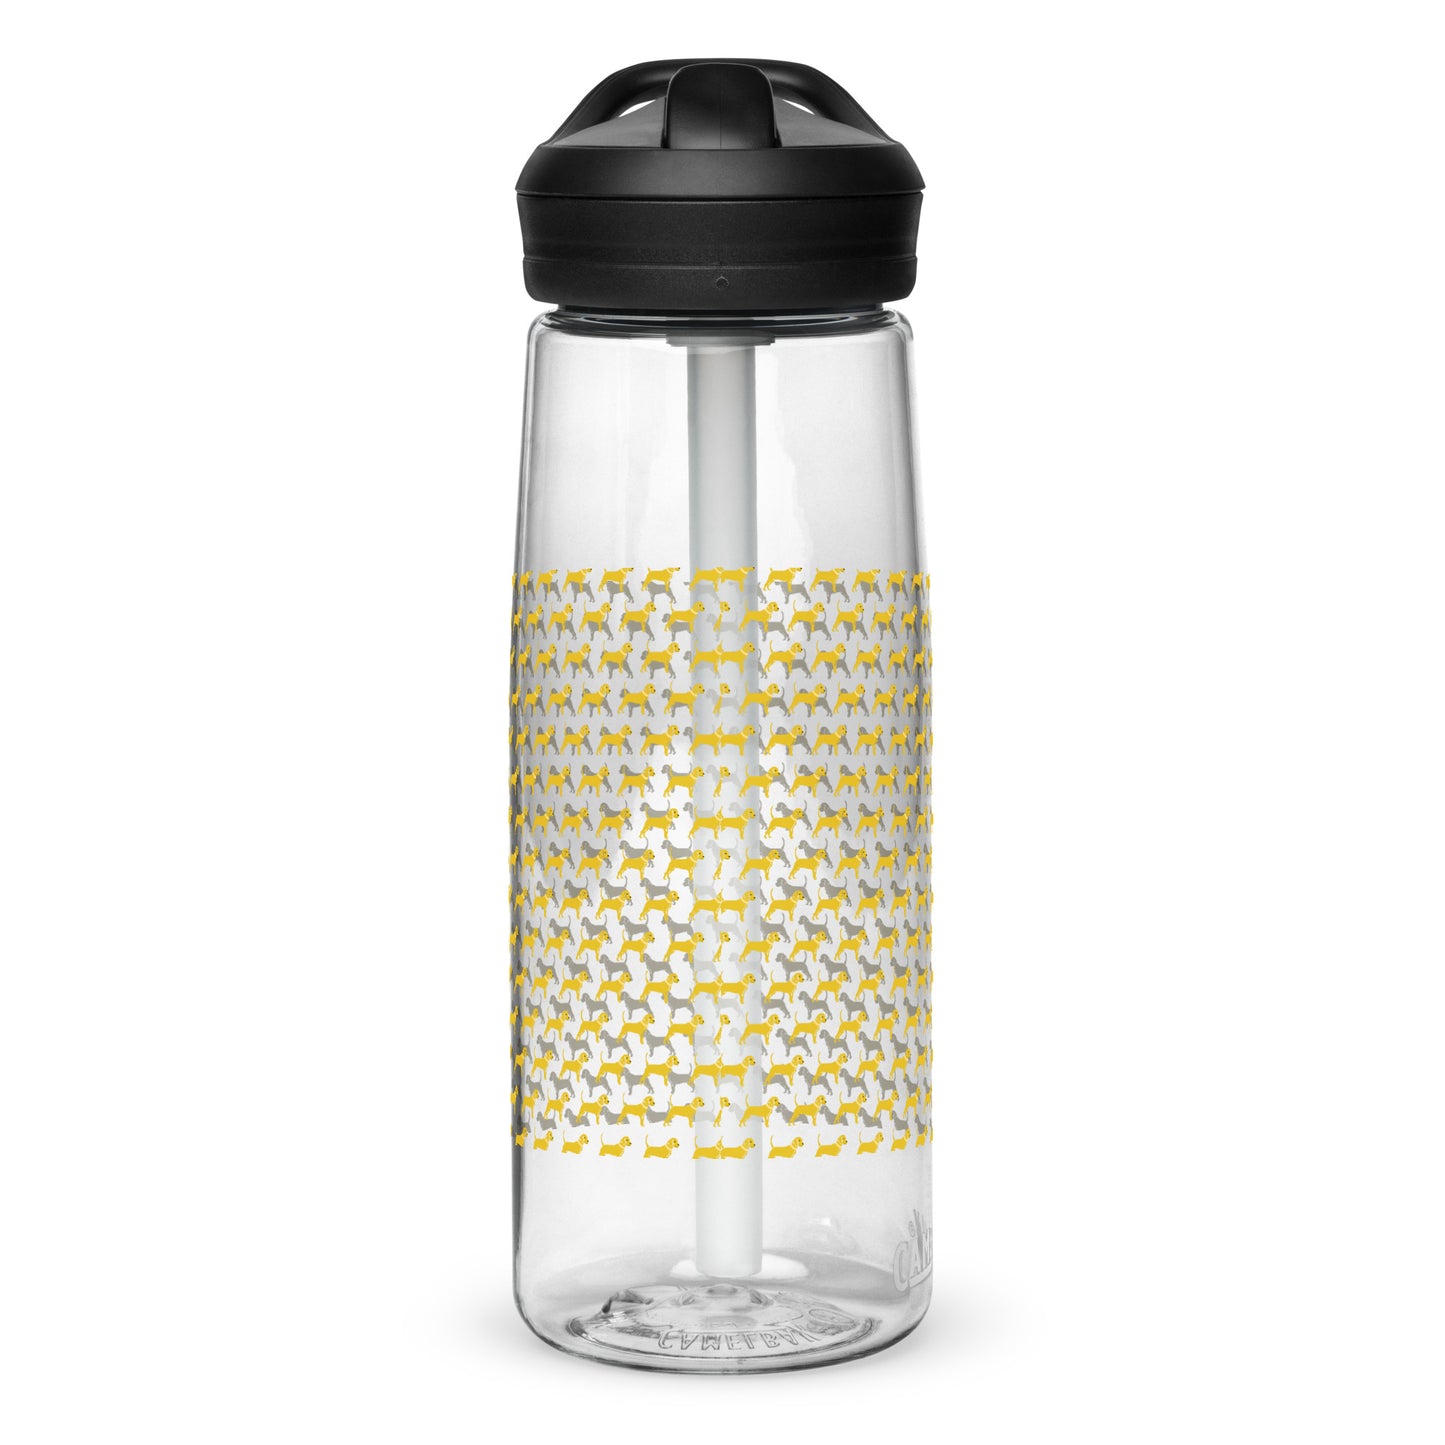 Little Yellow Dog Sports water bottle